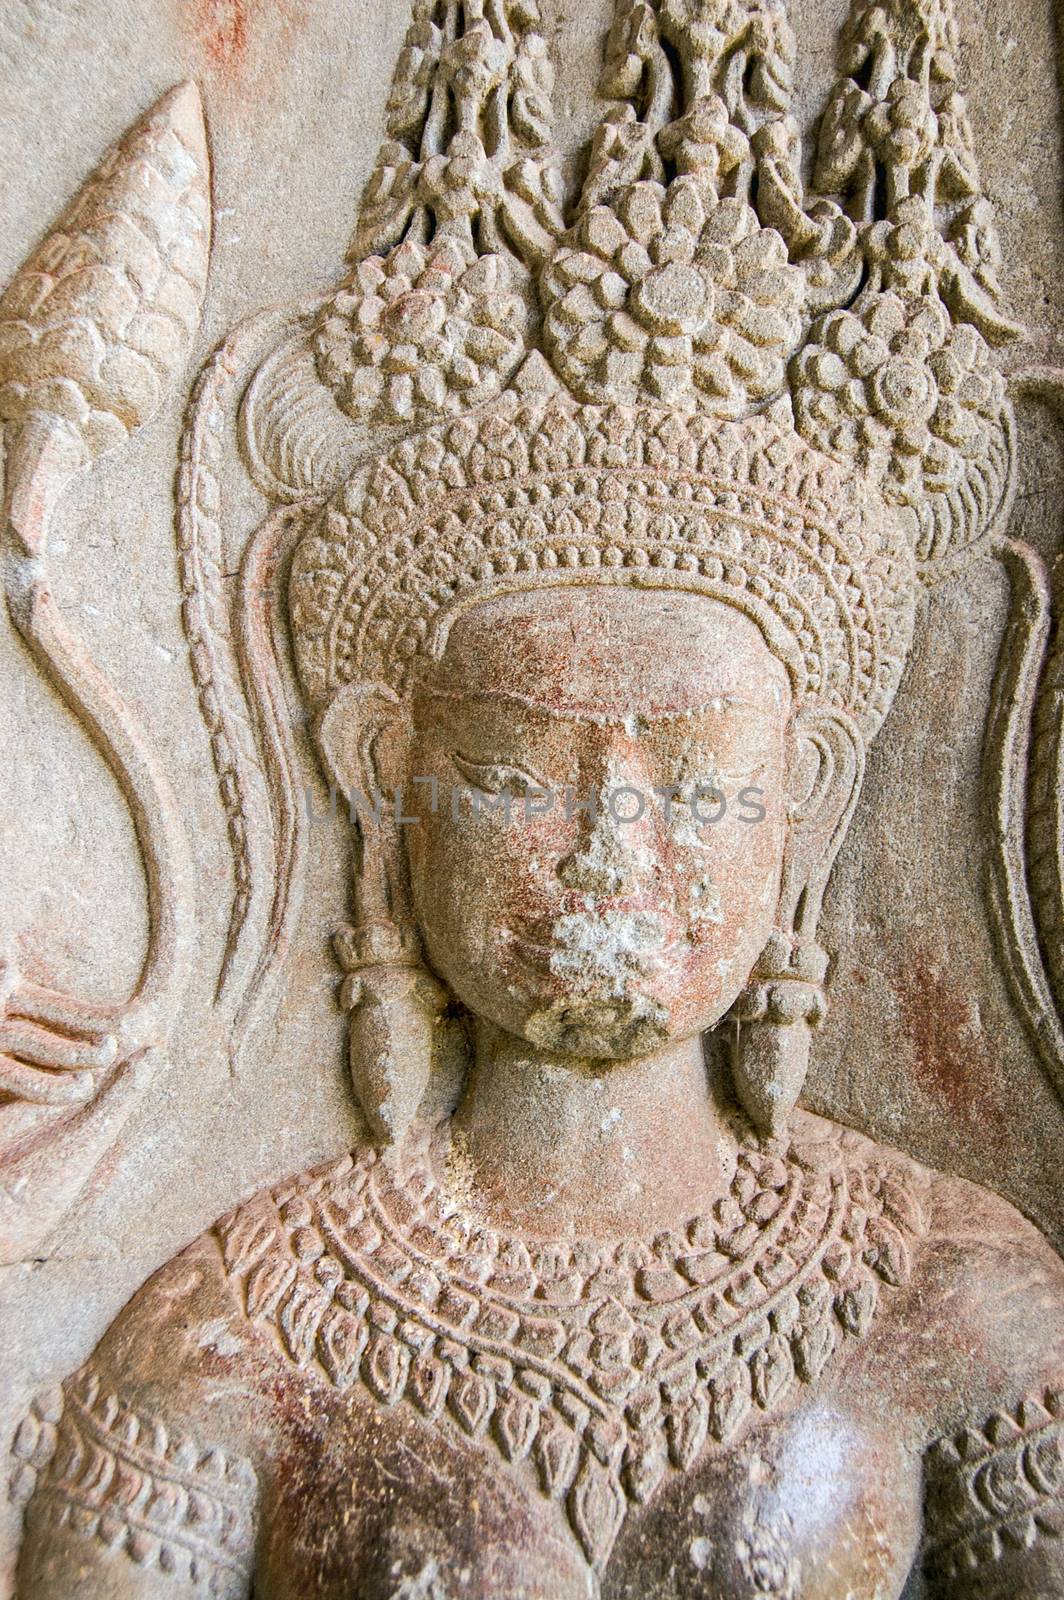 Apsara goddess face by BasPhoto